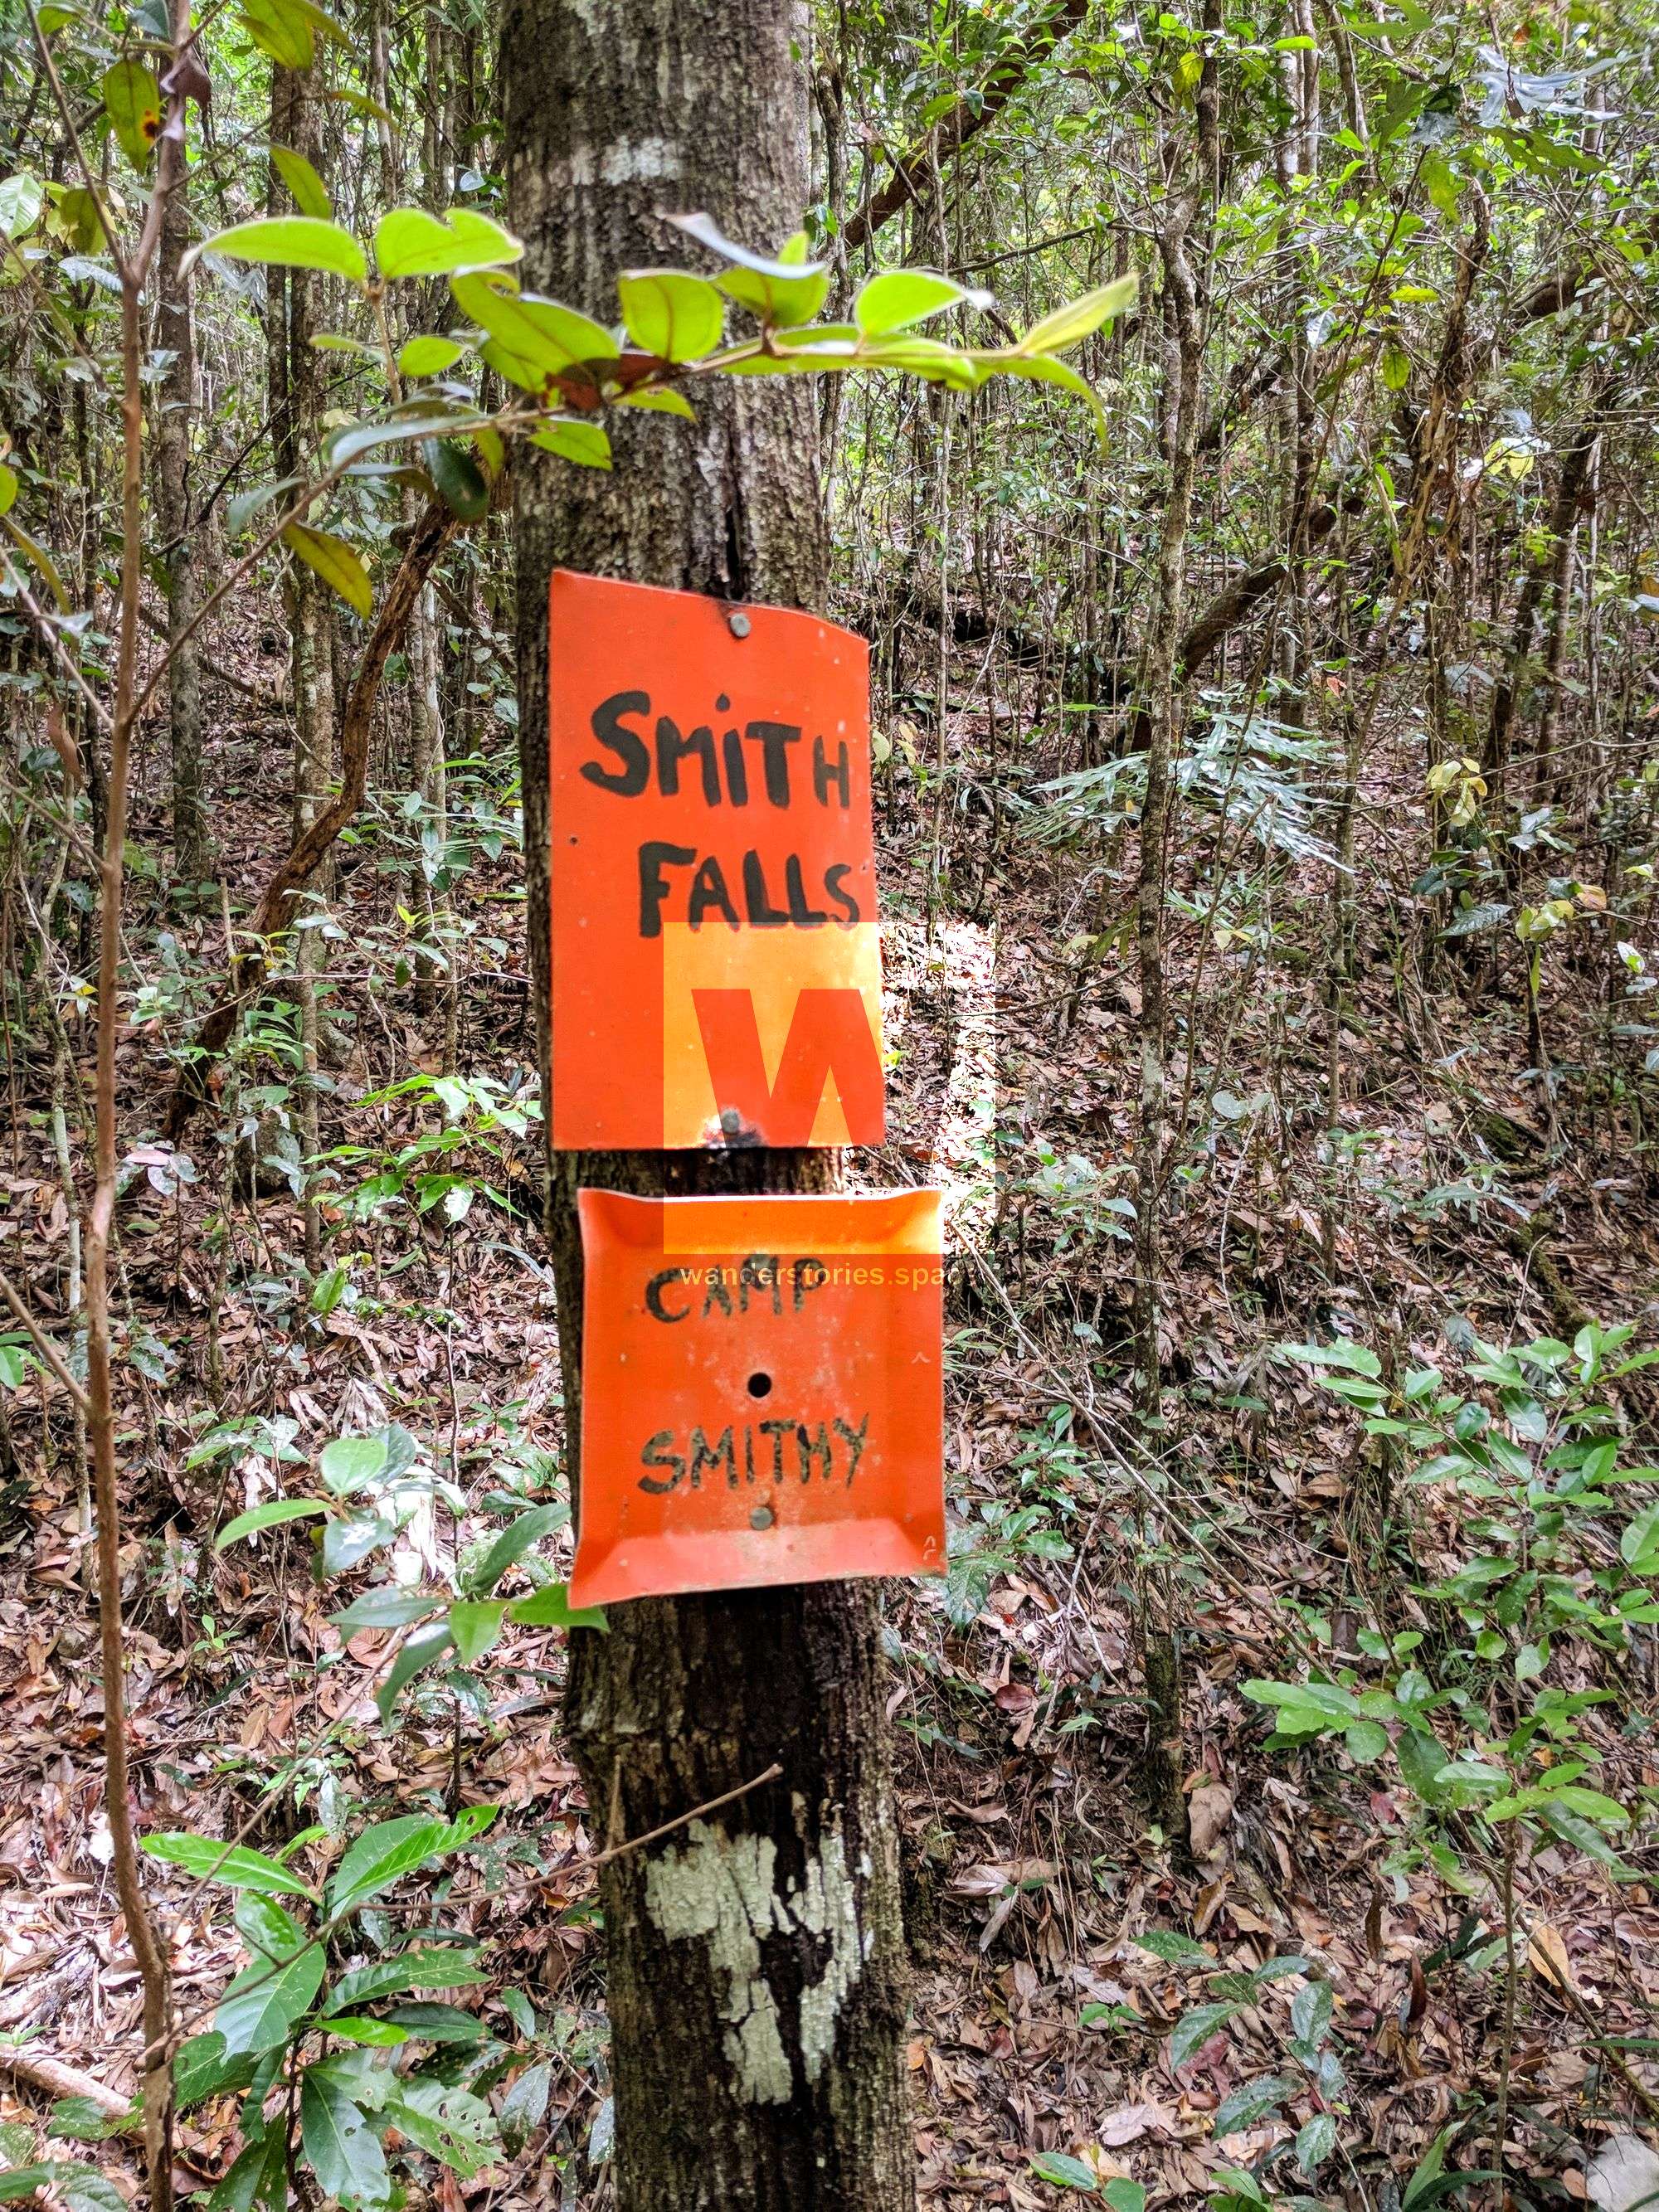 smith falls camp smithy sign